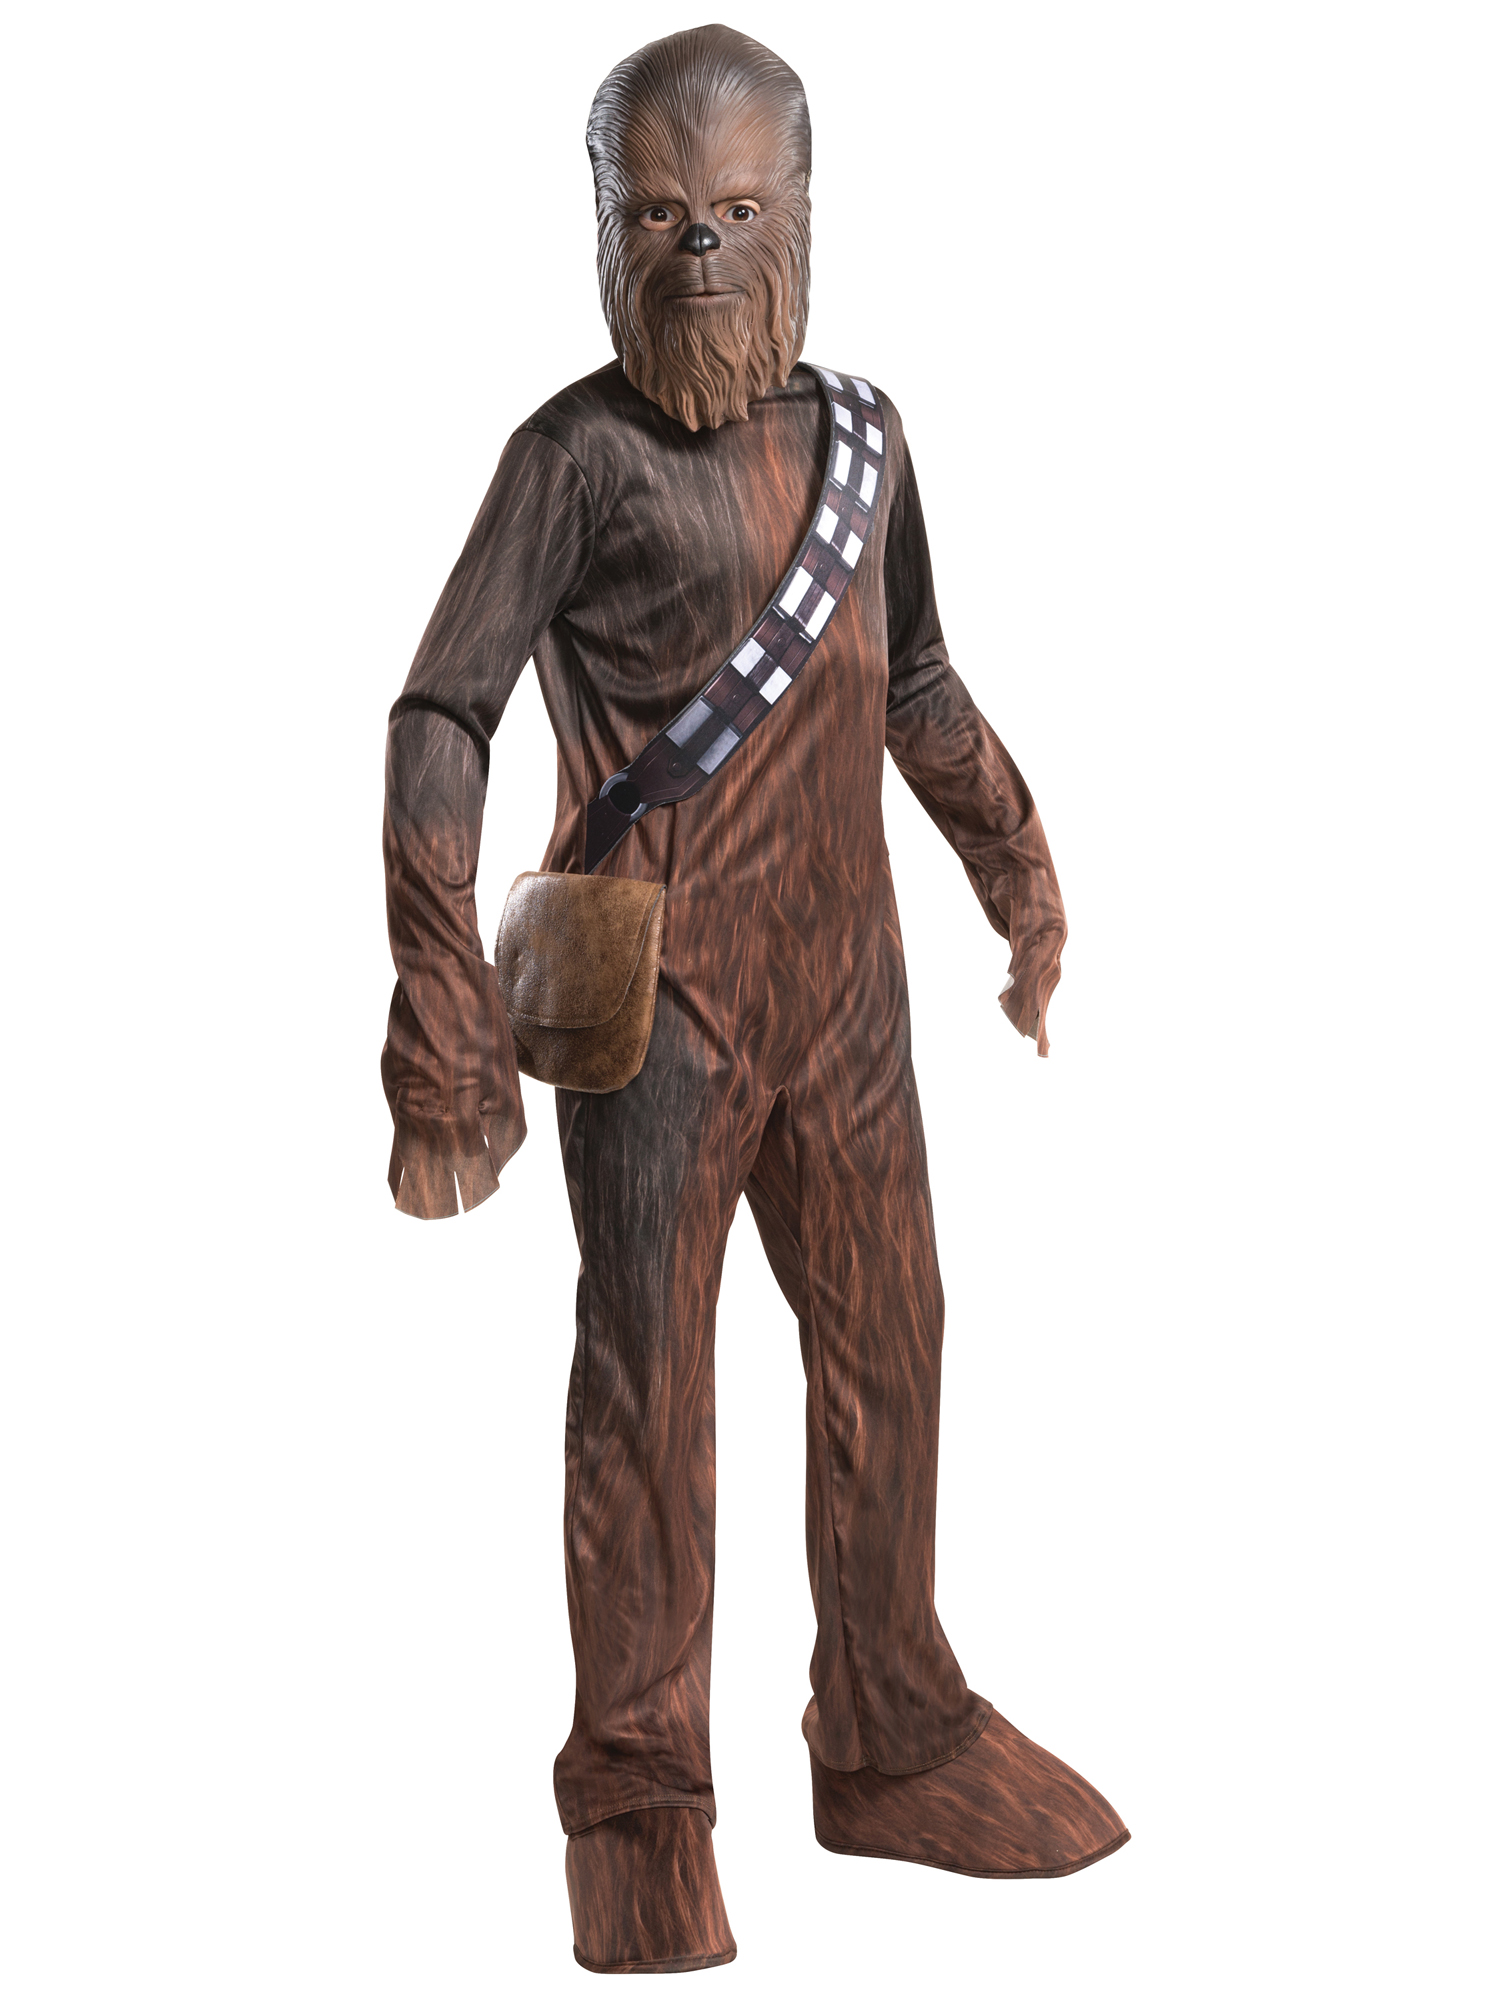 Rubies 620143 - Chewbacca 4tlg. Kinder Kostüm, Star Wars, Größe ca. 3 - 10 Jahre